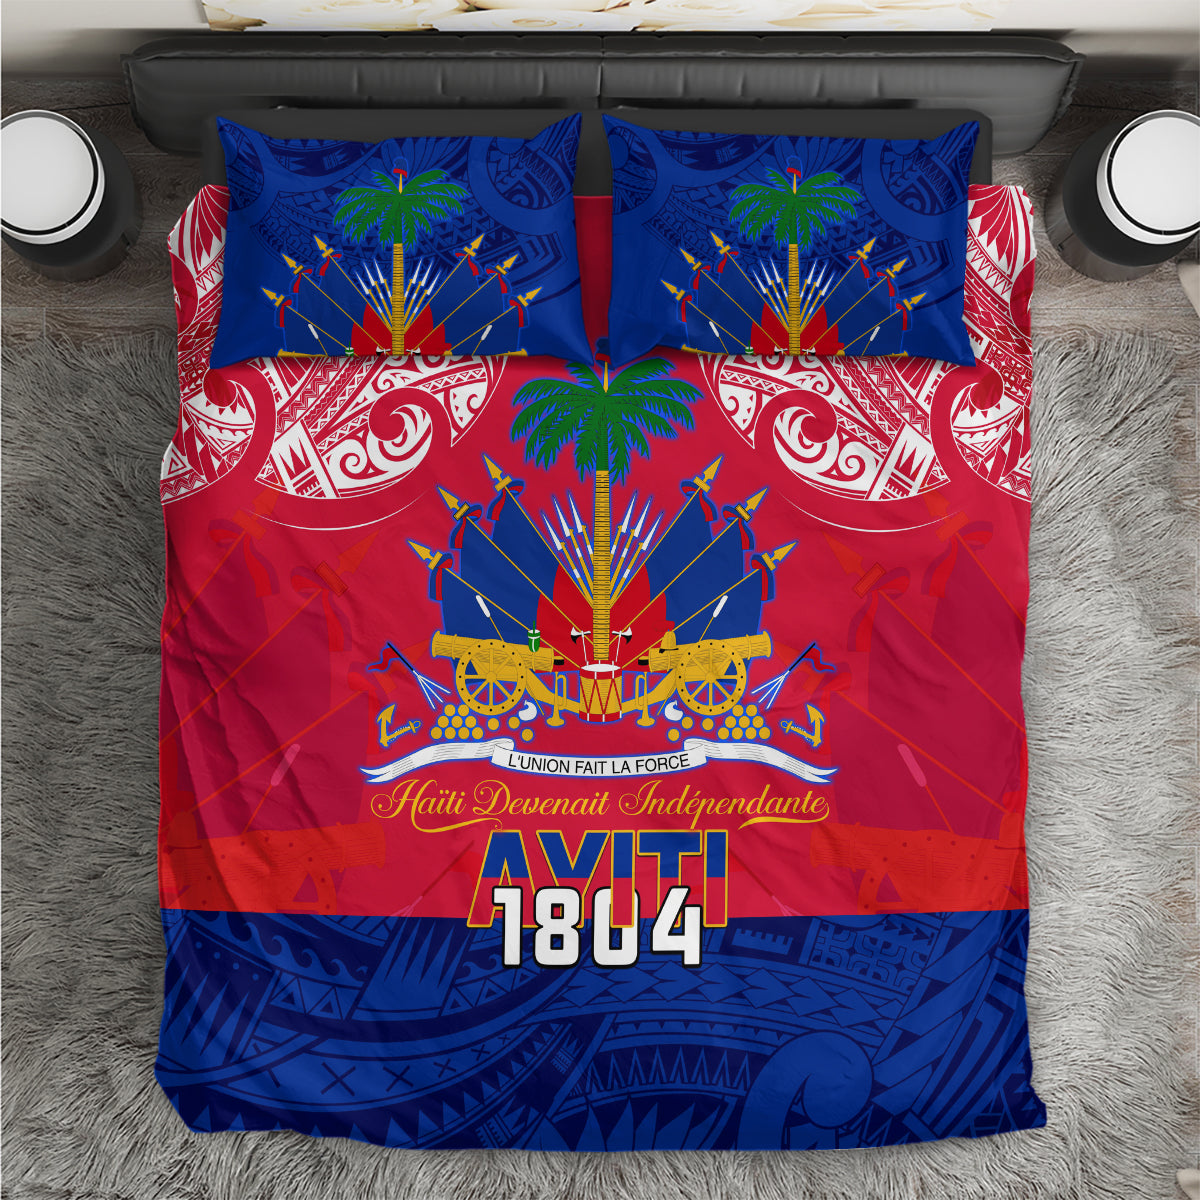 haiti-independence-day-bedding-set-libete-egalite-fratenite-ayiti-1804-with-polynesian-pattern